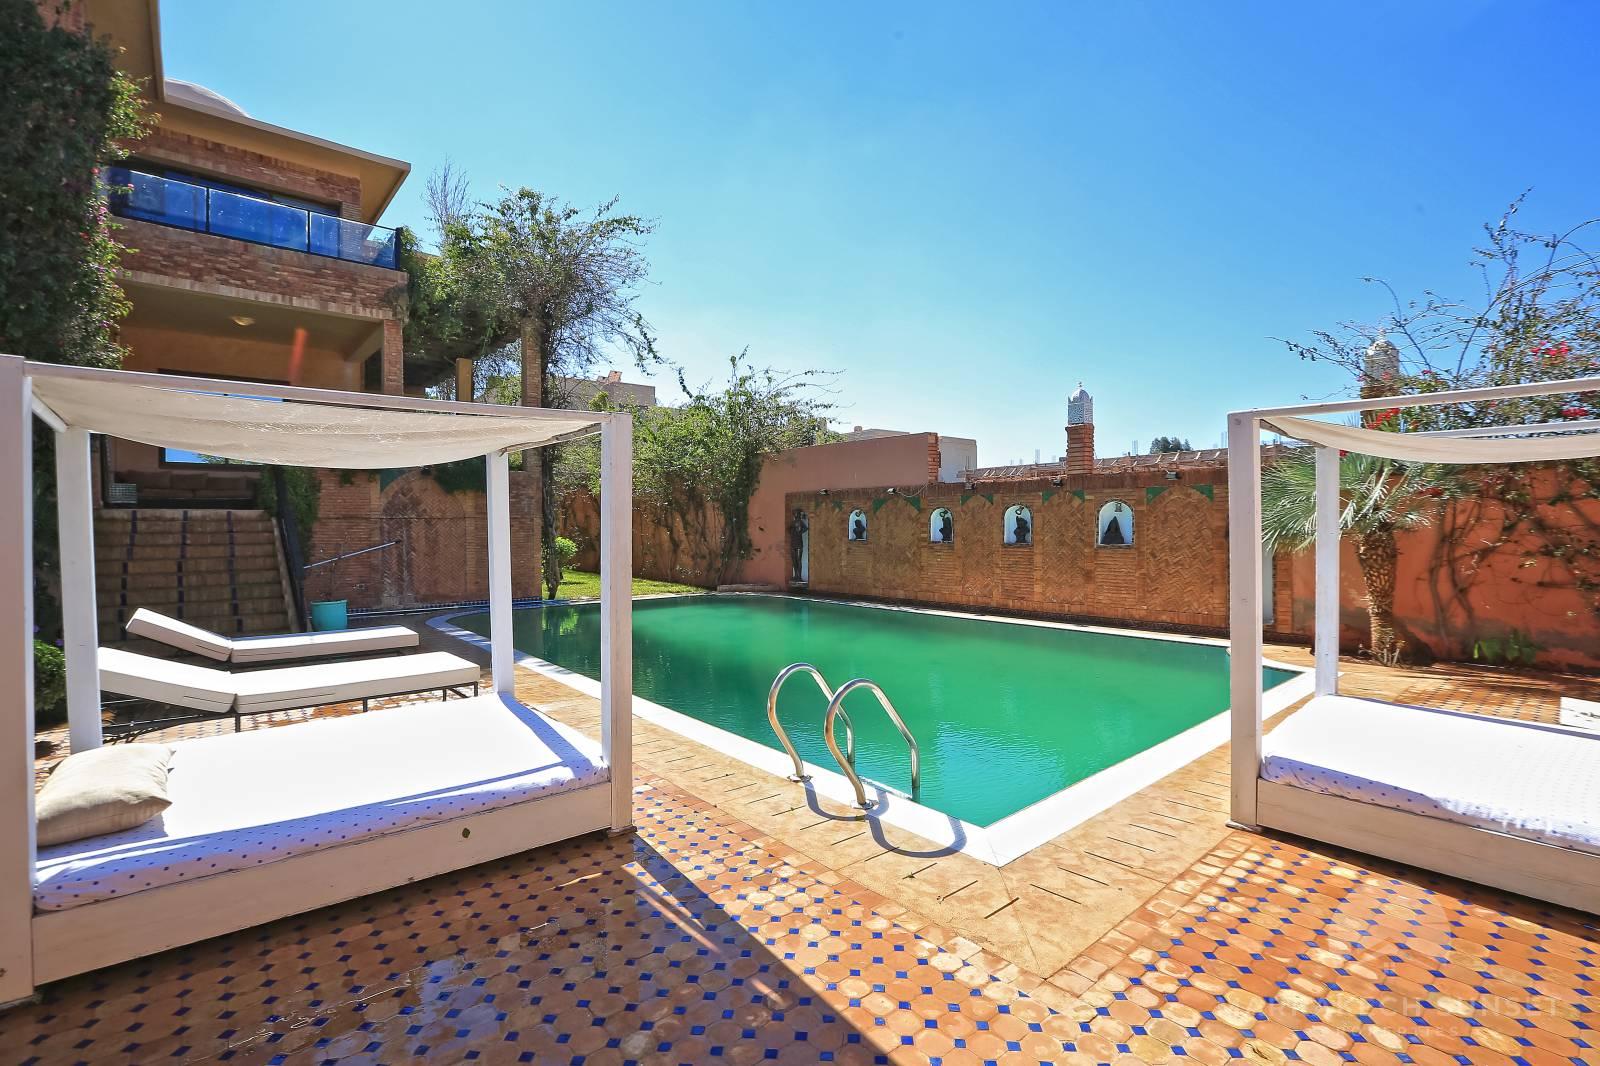 8 bedroom villa for sale Marrakech Amelkis golf club